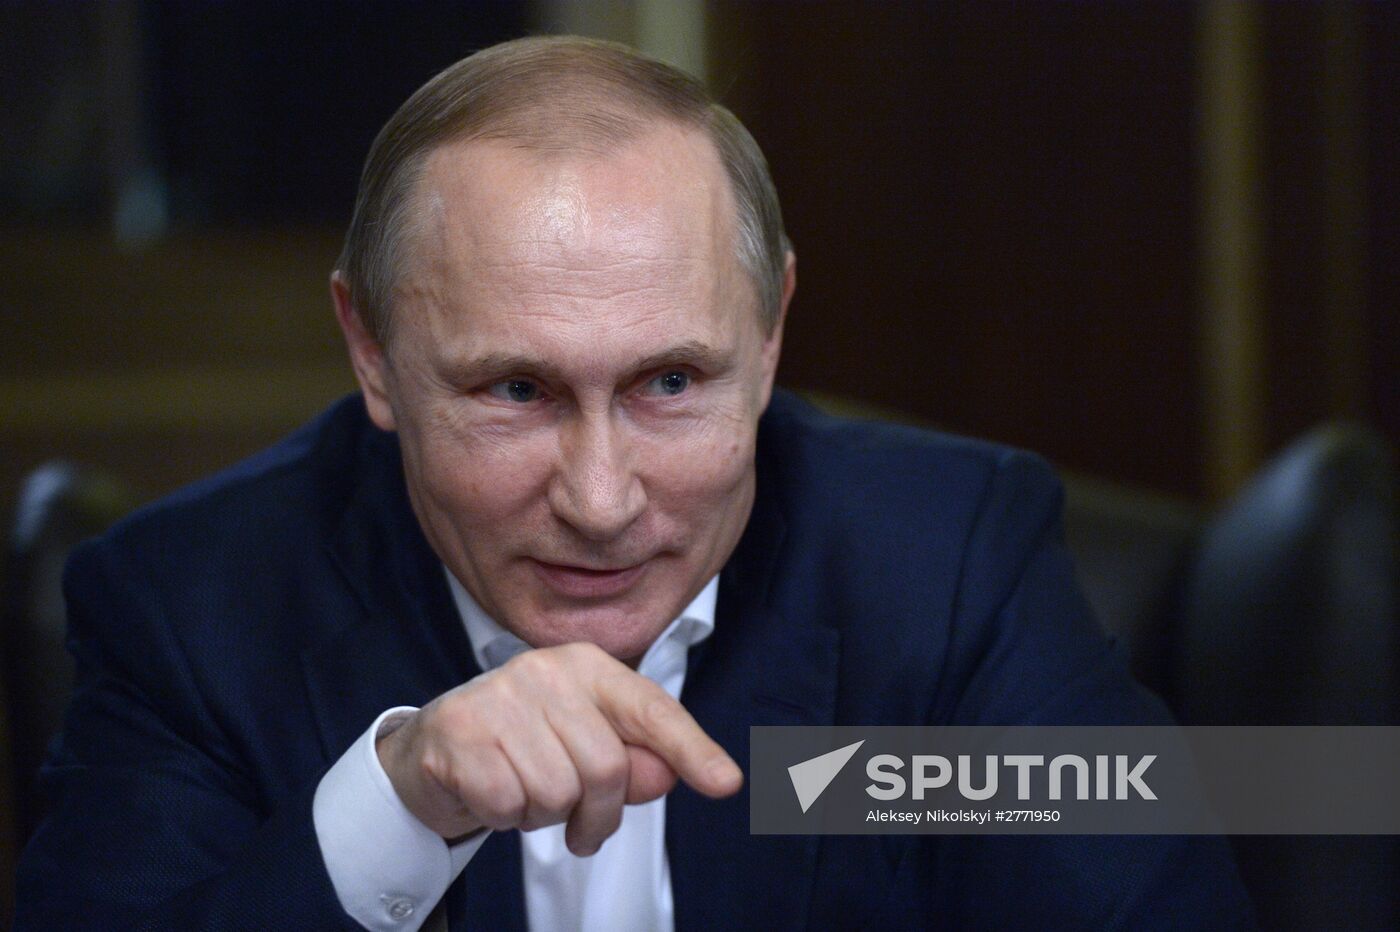 Russian President Vladimir Putin interviewed by Germany's Bild magazine